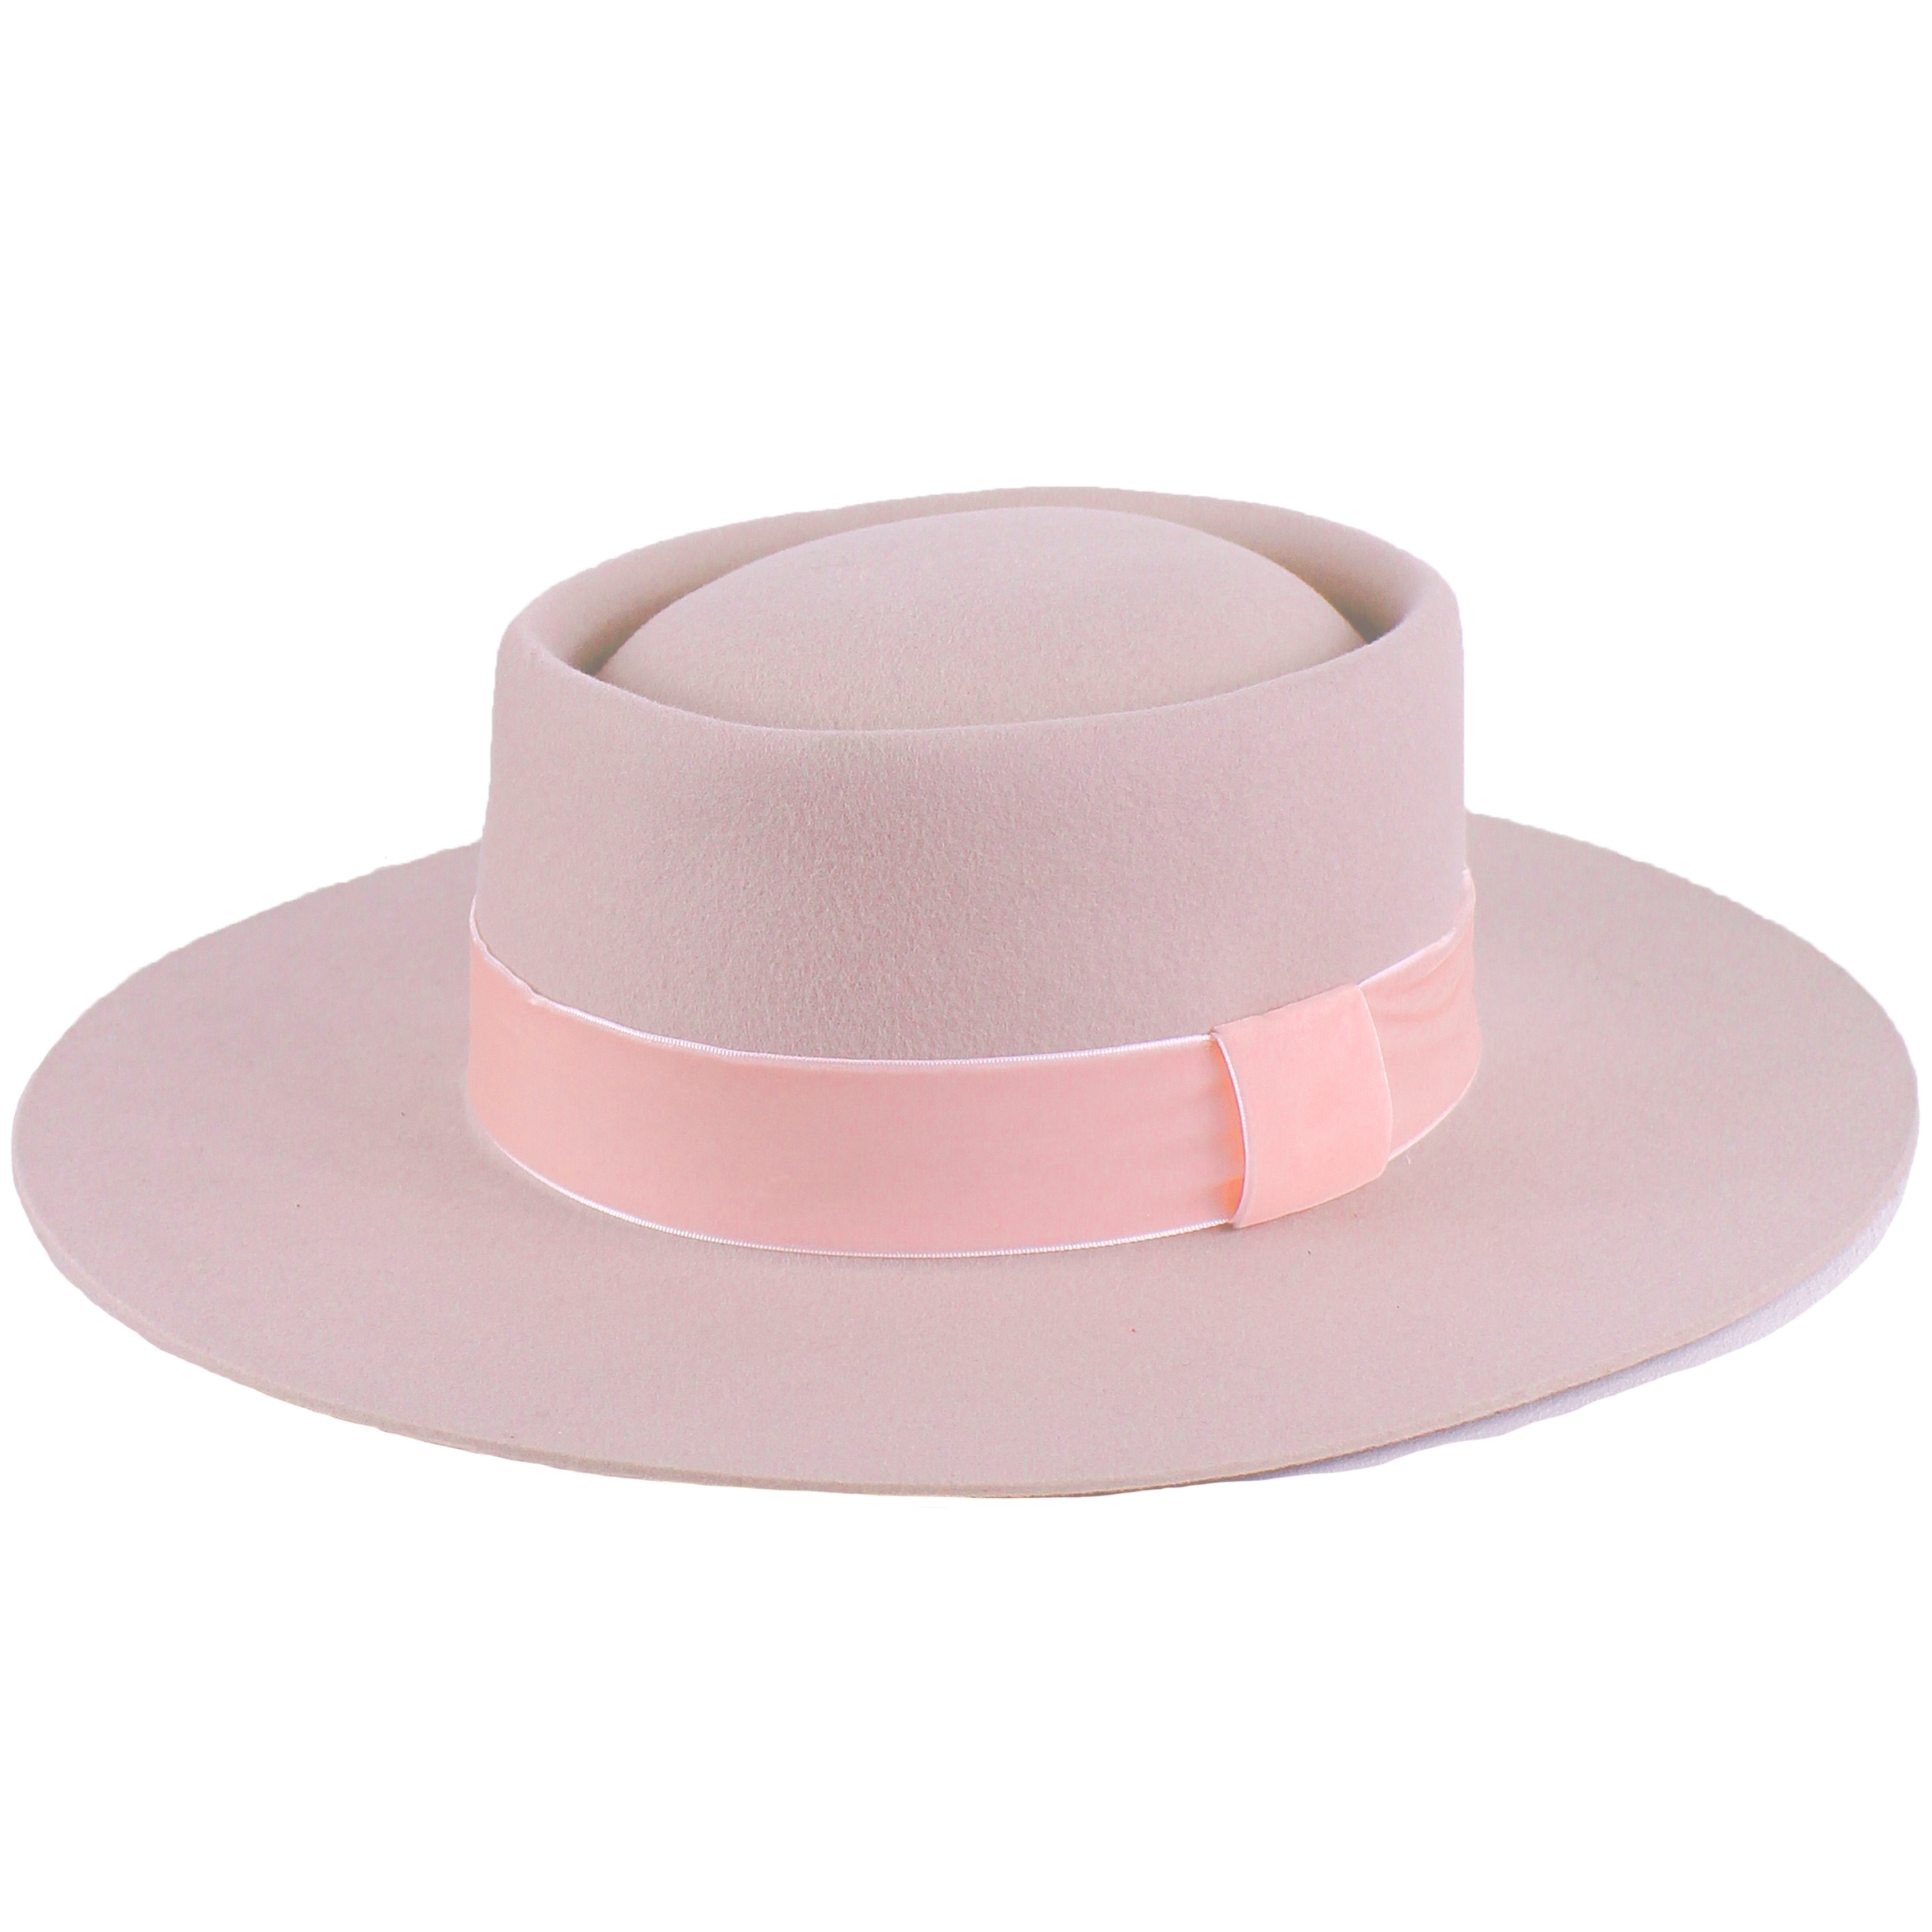 Soft blush kayo boater hat